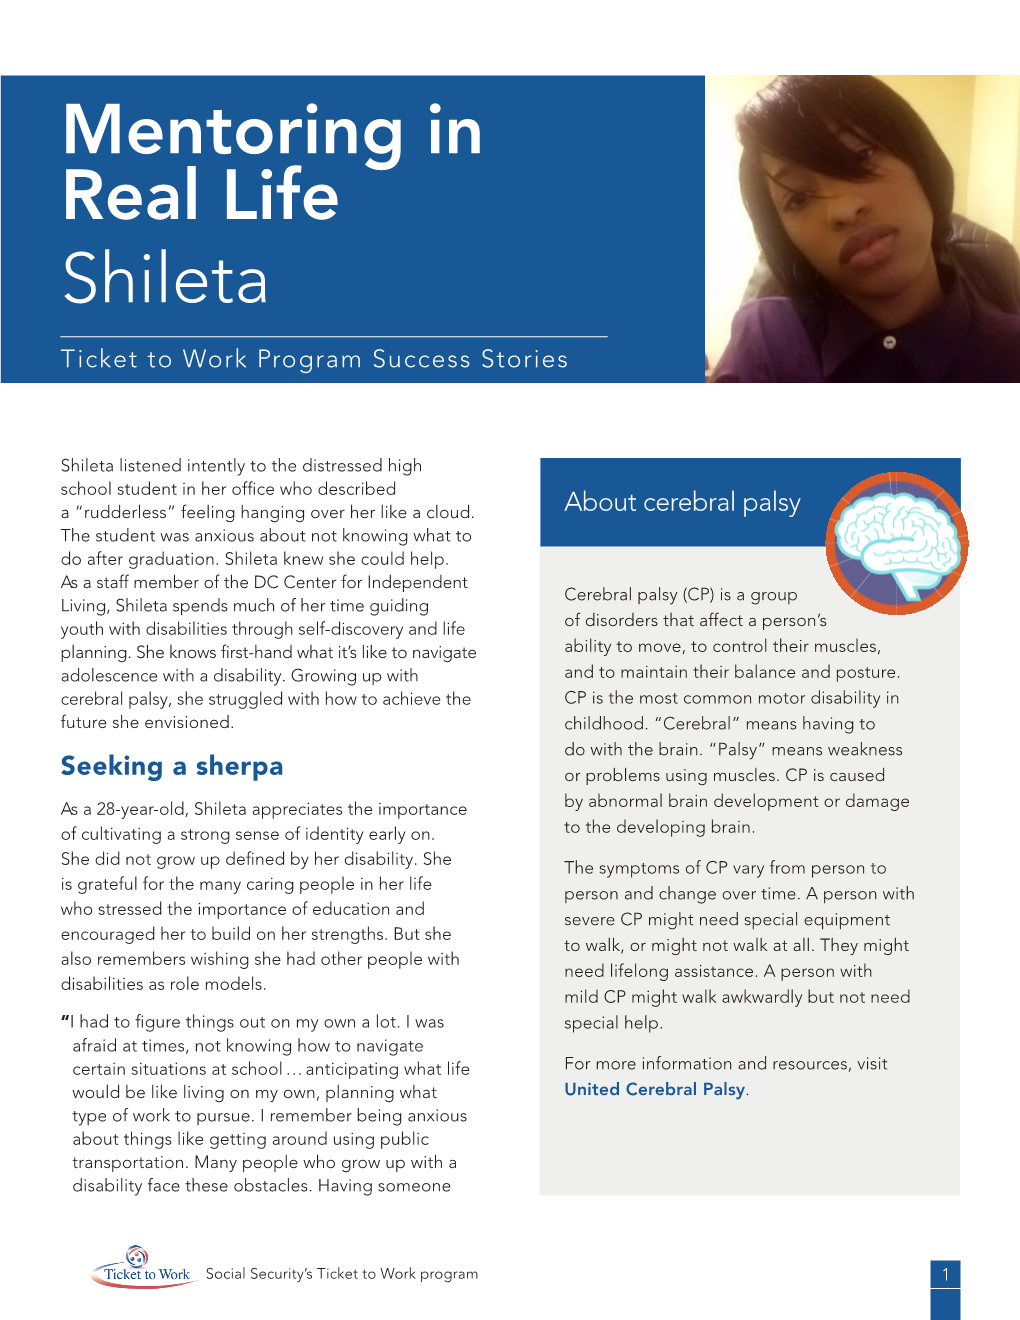 Mentoring in Real Life, Shileta